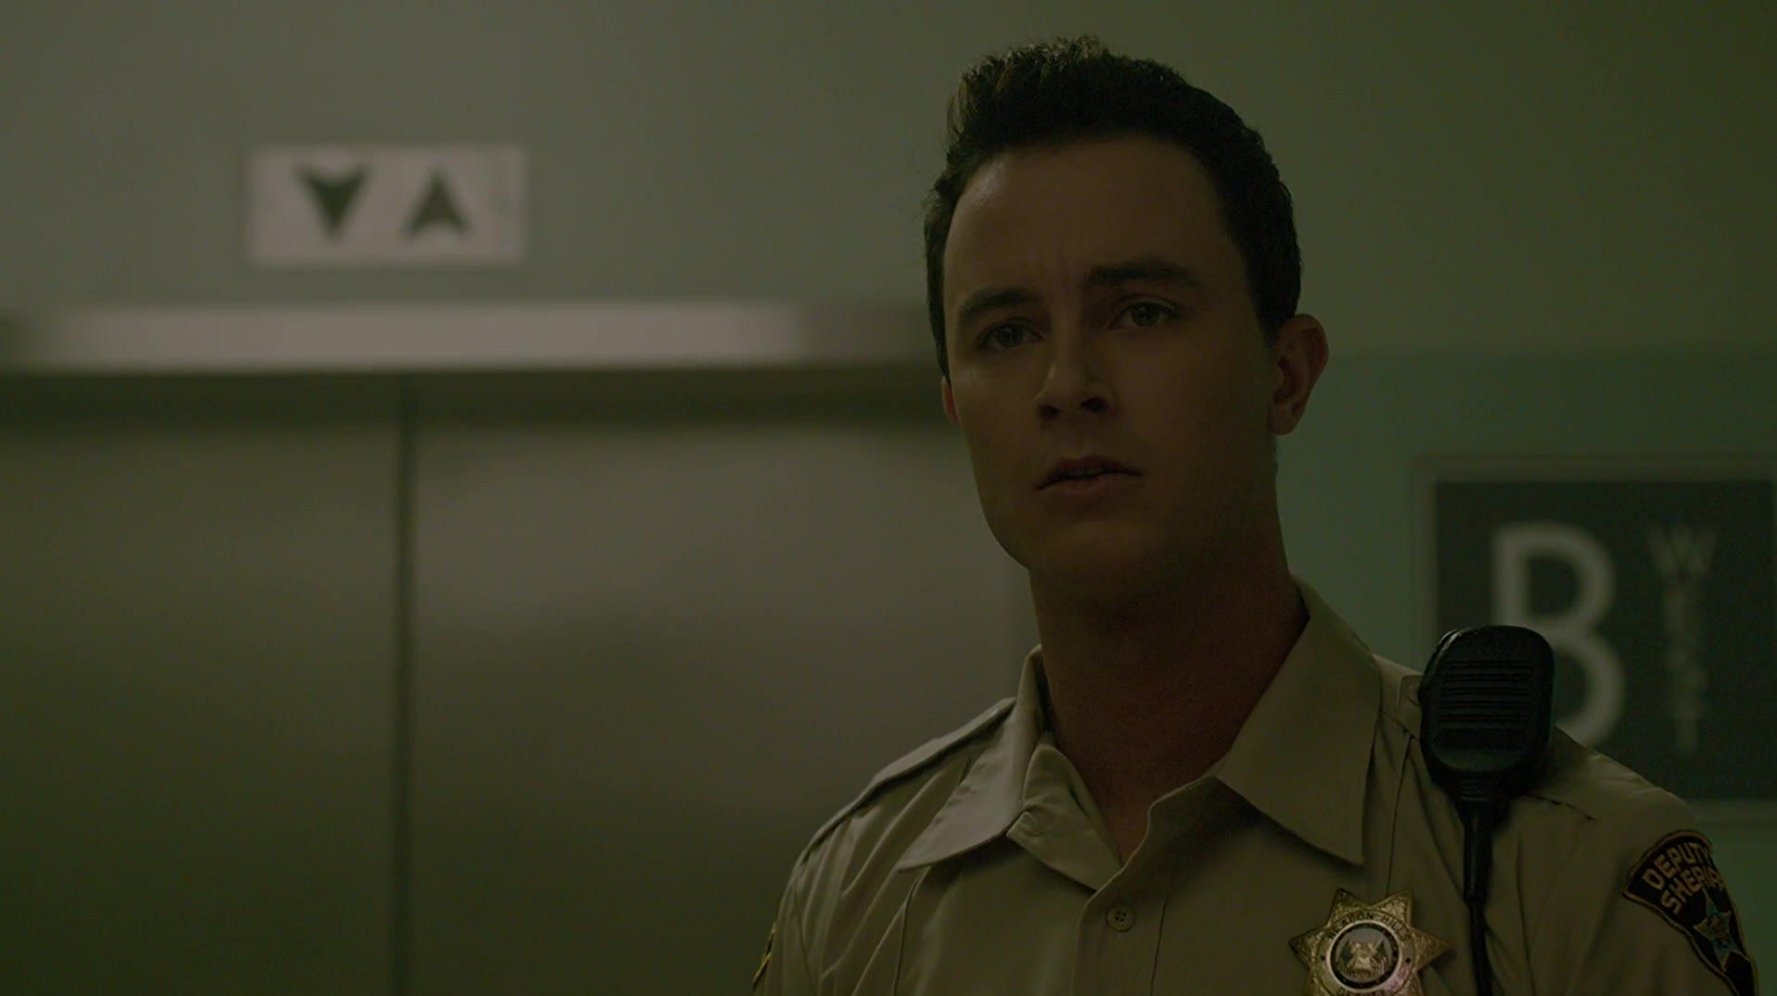 Deputy Parrish